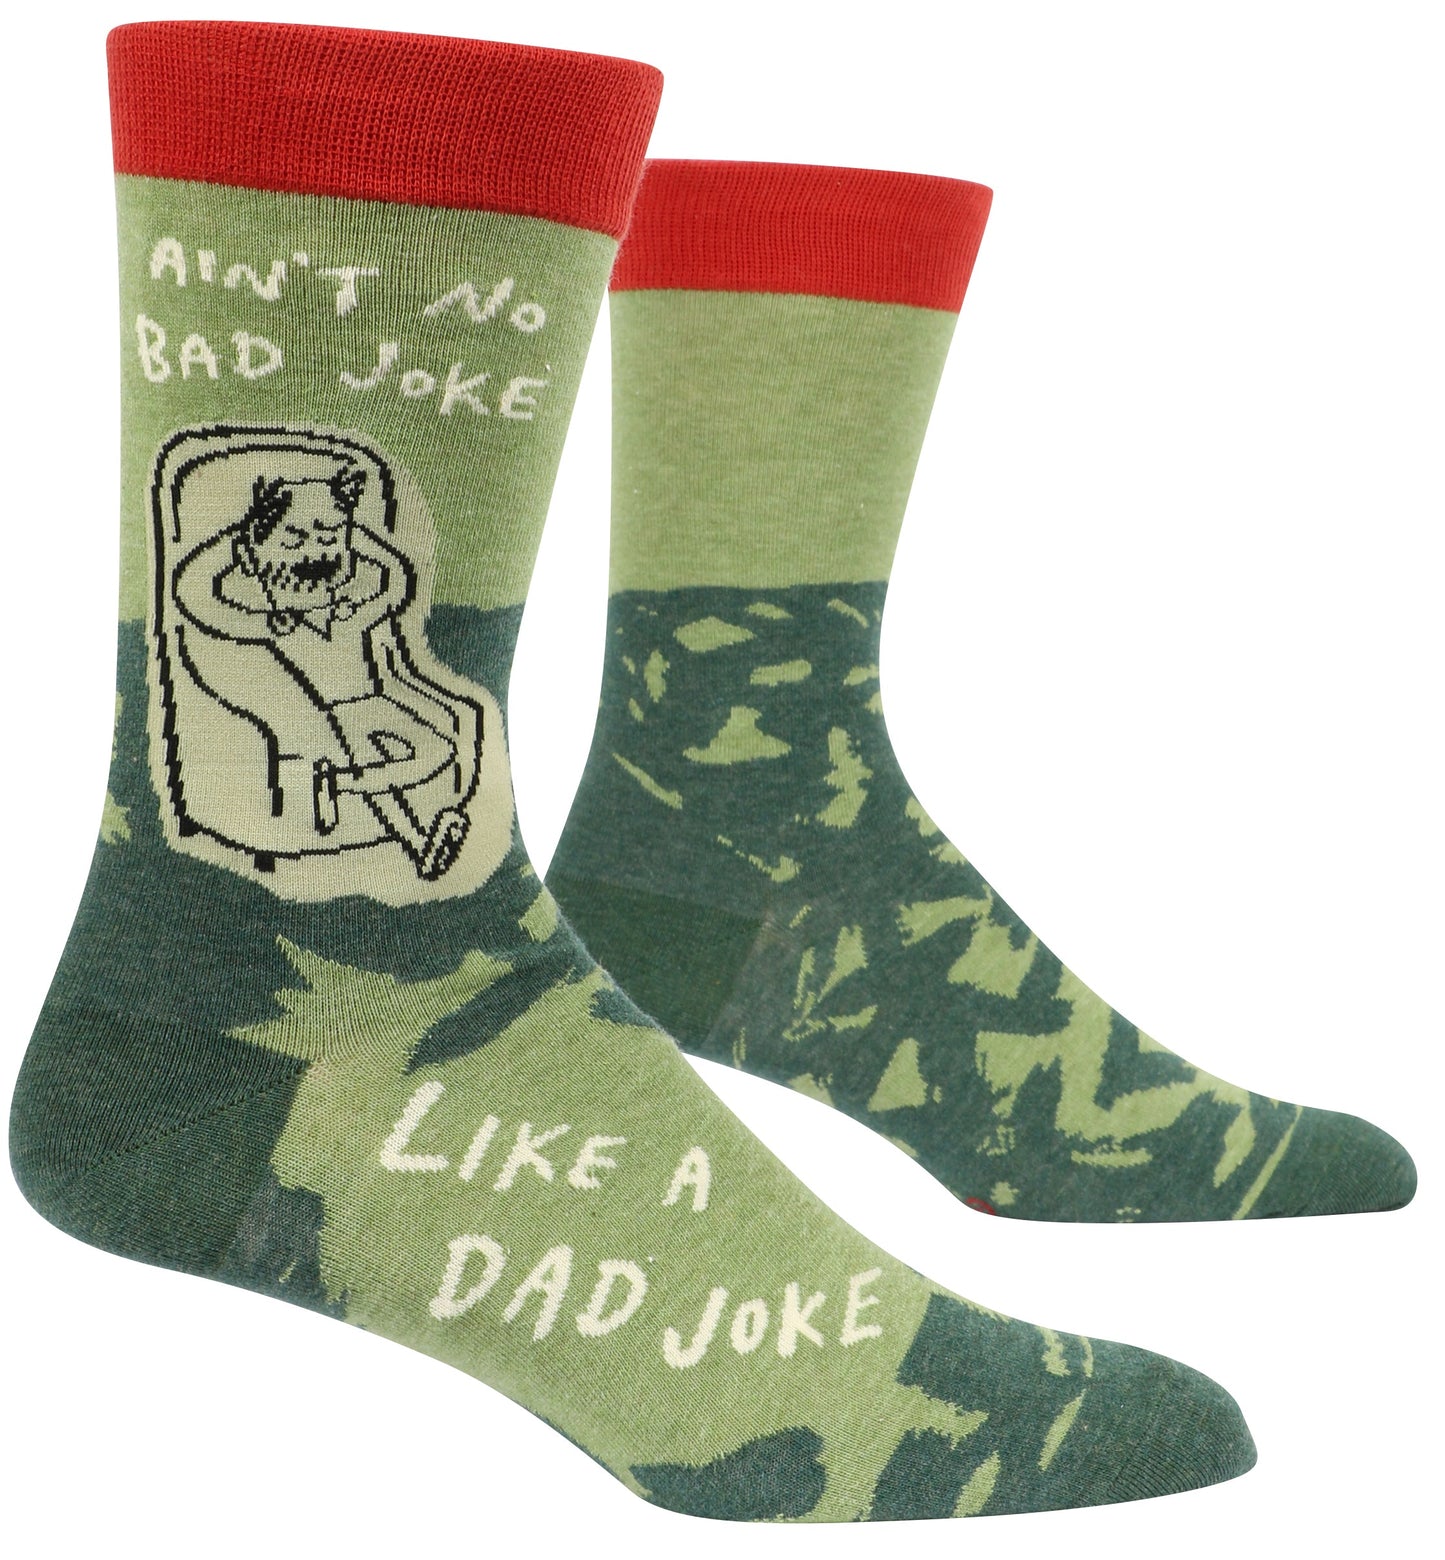 Dad Joke Men's Crew Socks